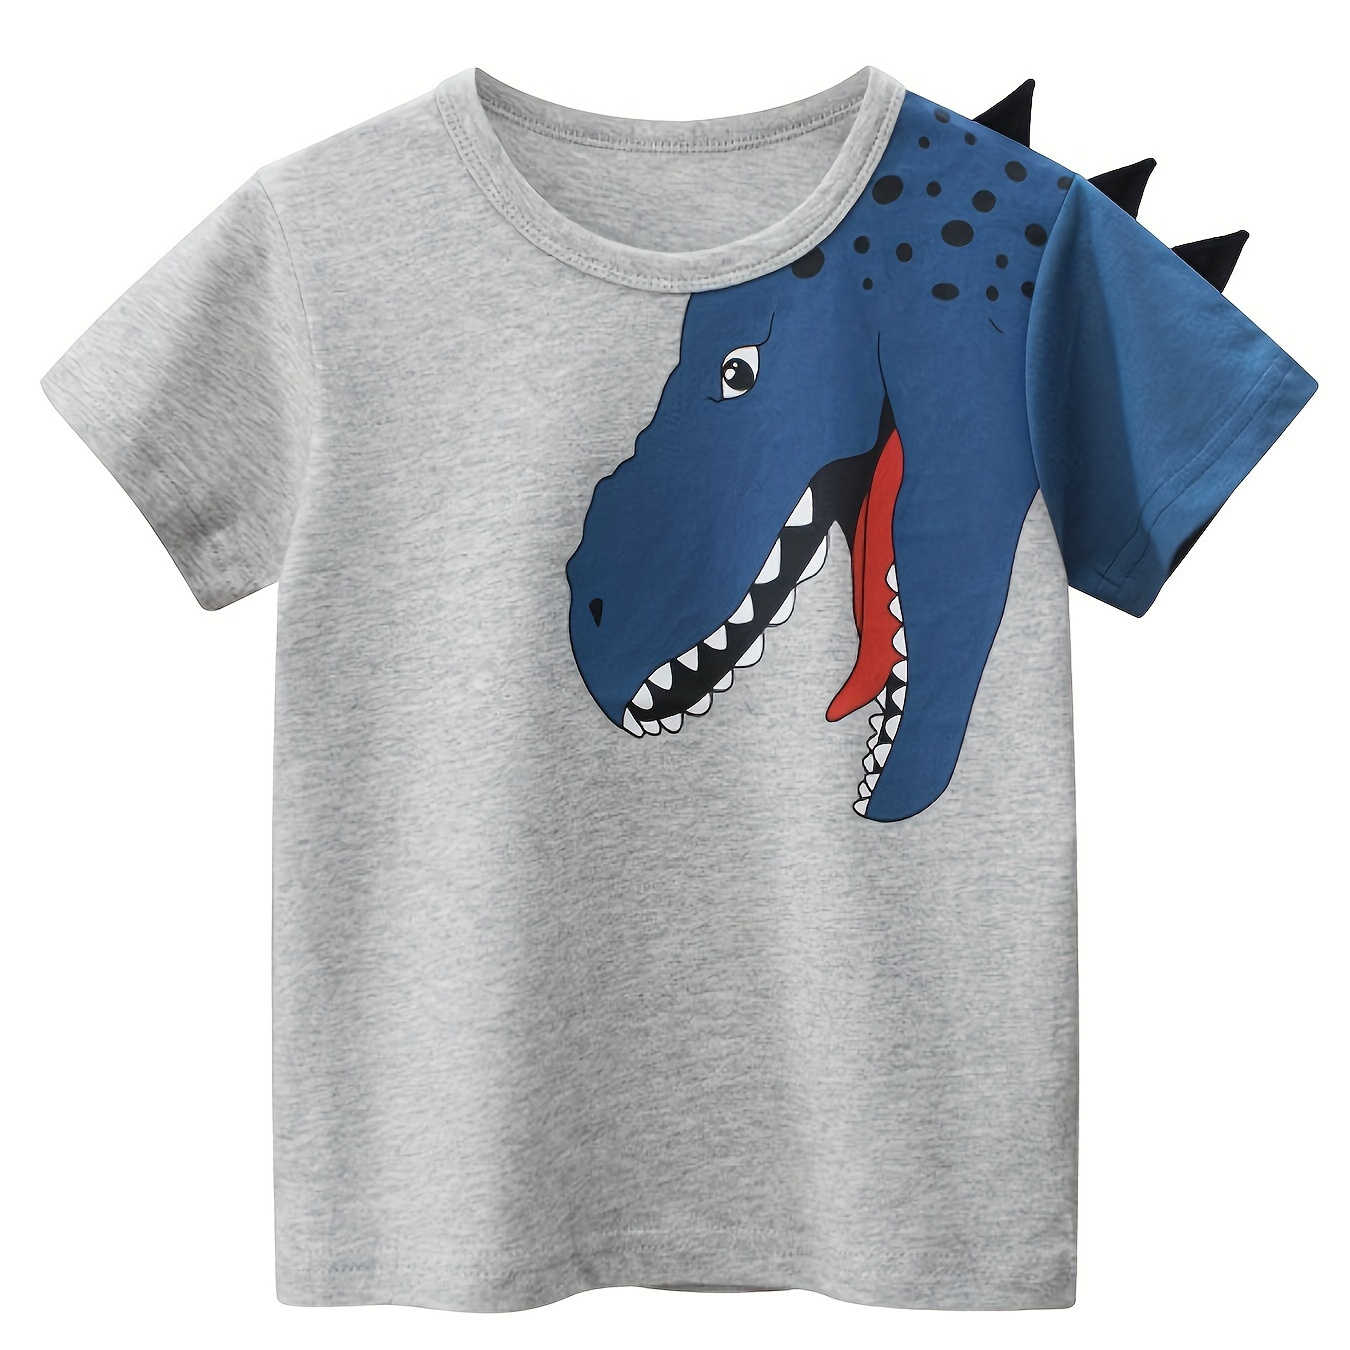 

Boys Cotton Round Neck T-shirt Three-dimensional Dinosaur Print Short Sleeve Tees Top Summer Clothes